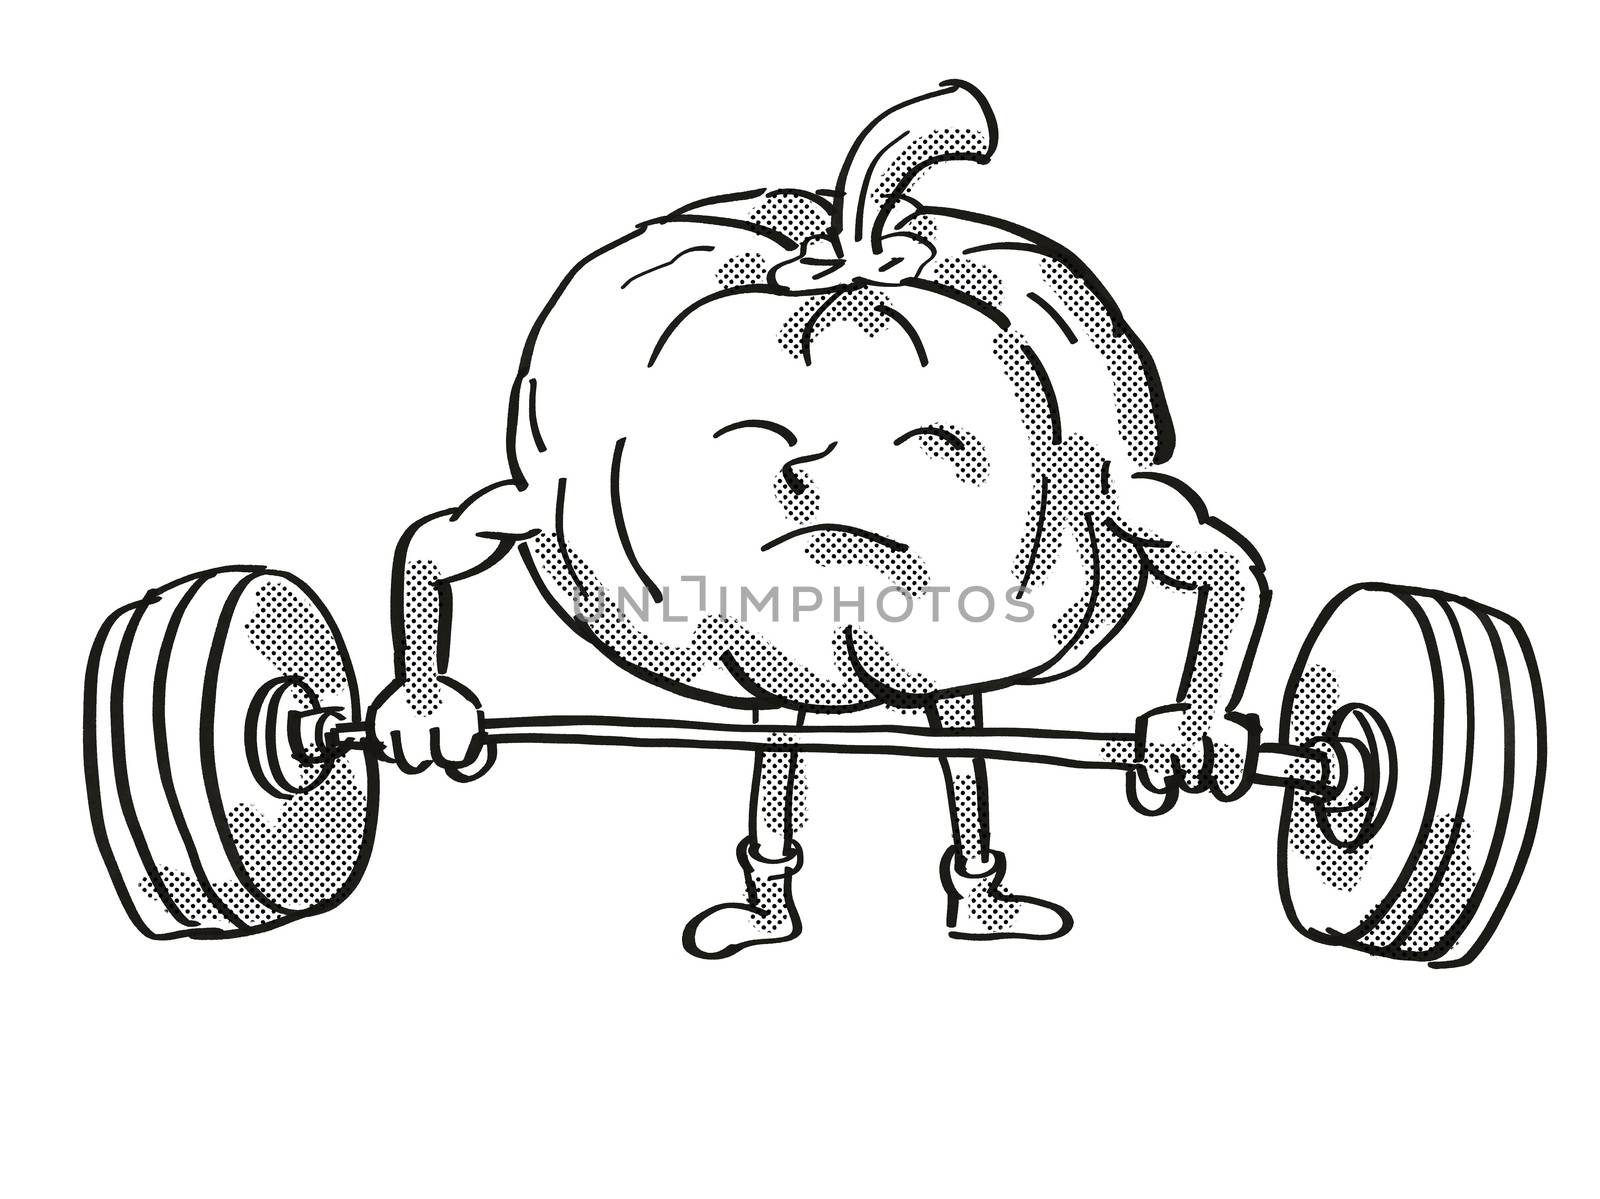 Pumpkin or Squash Healthy Vegetable Lifting Barbell Cartoon Retro Drawing by patrimonio